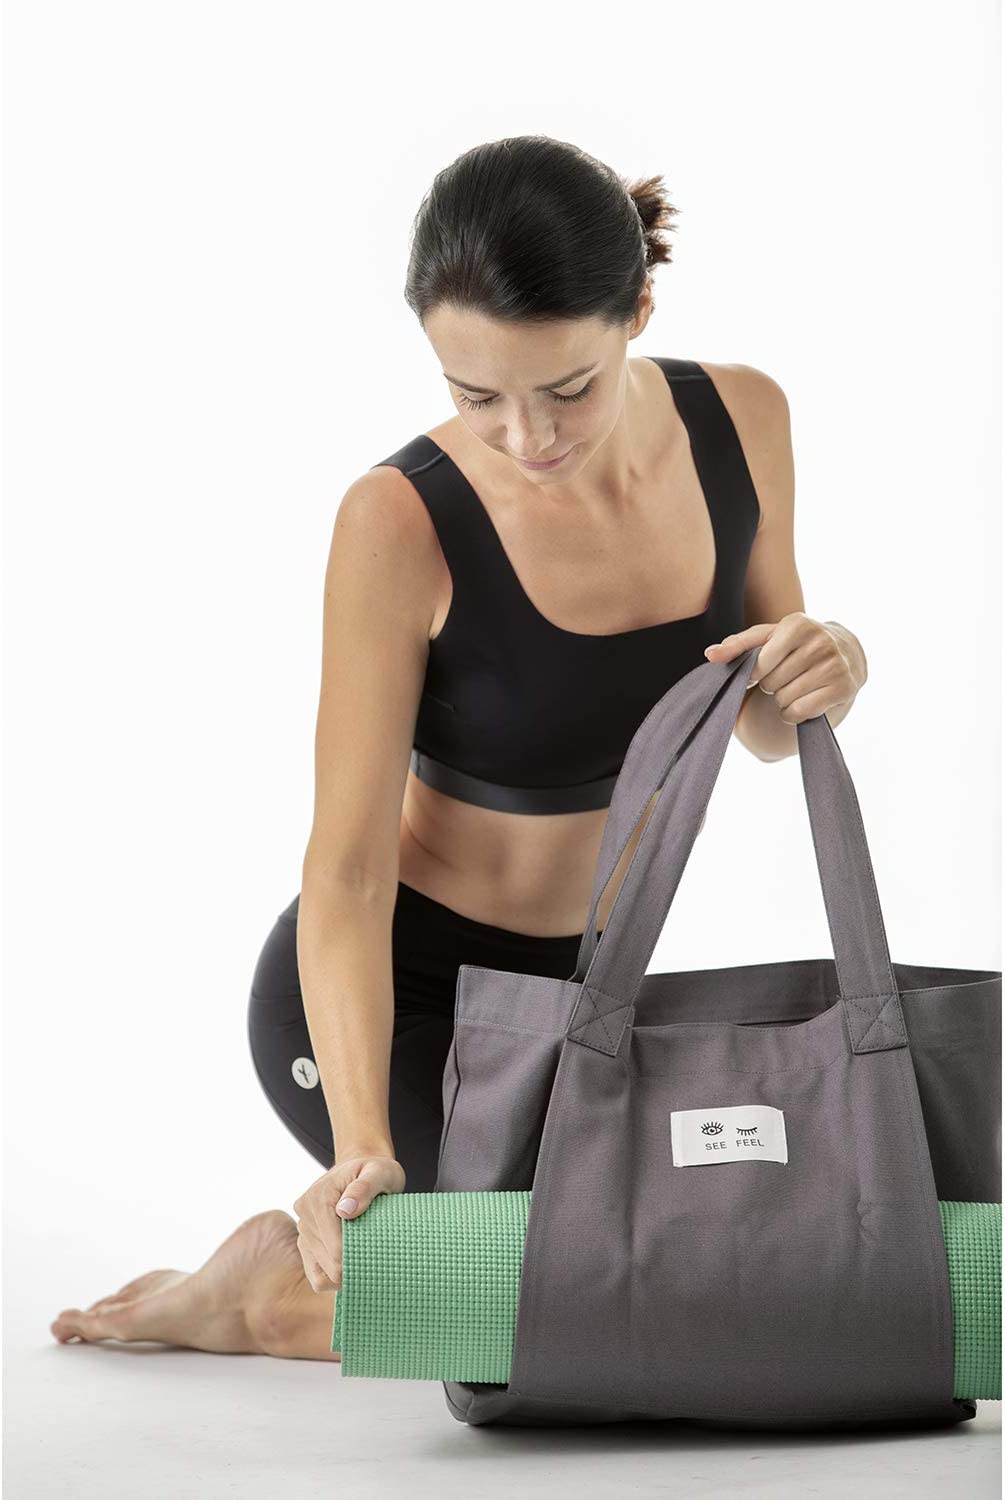 Yoga Tote Bag Essentials